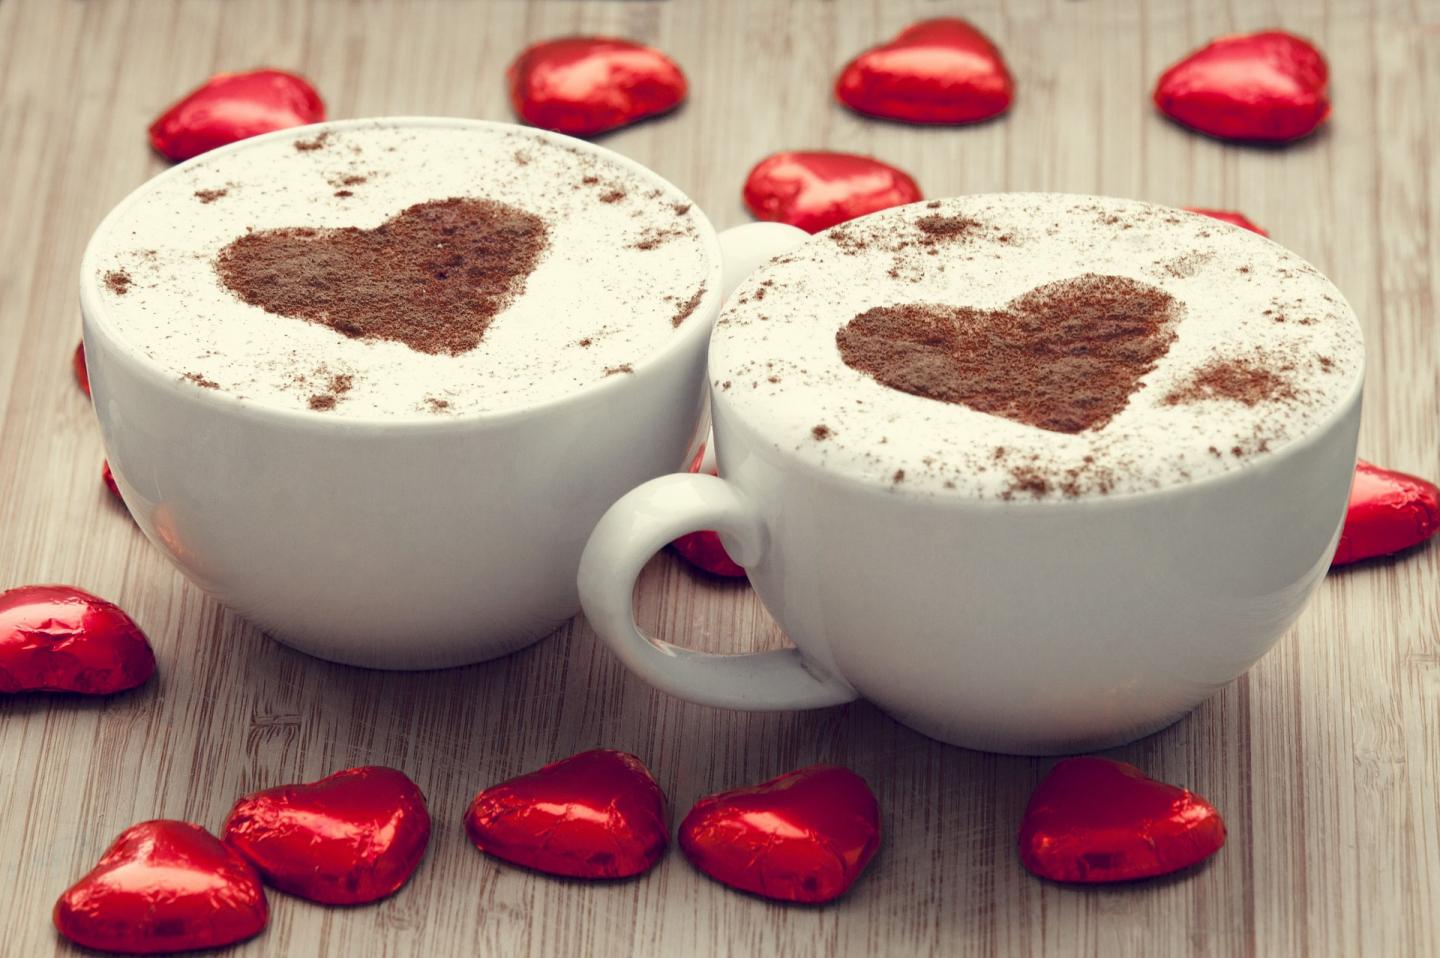 Coffee with chocolate hearts